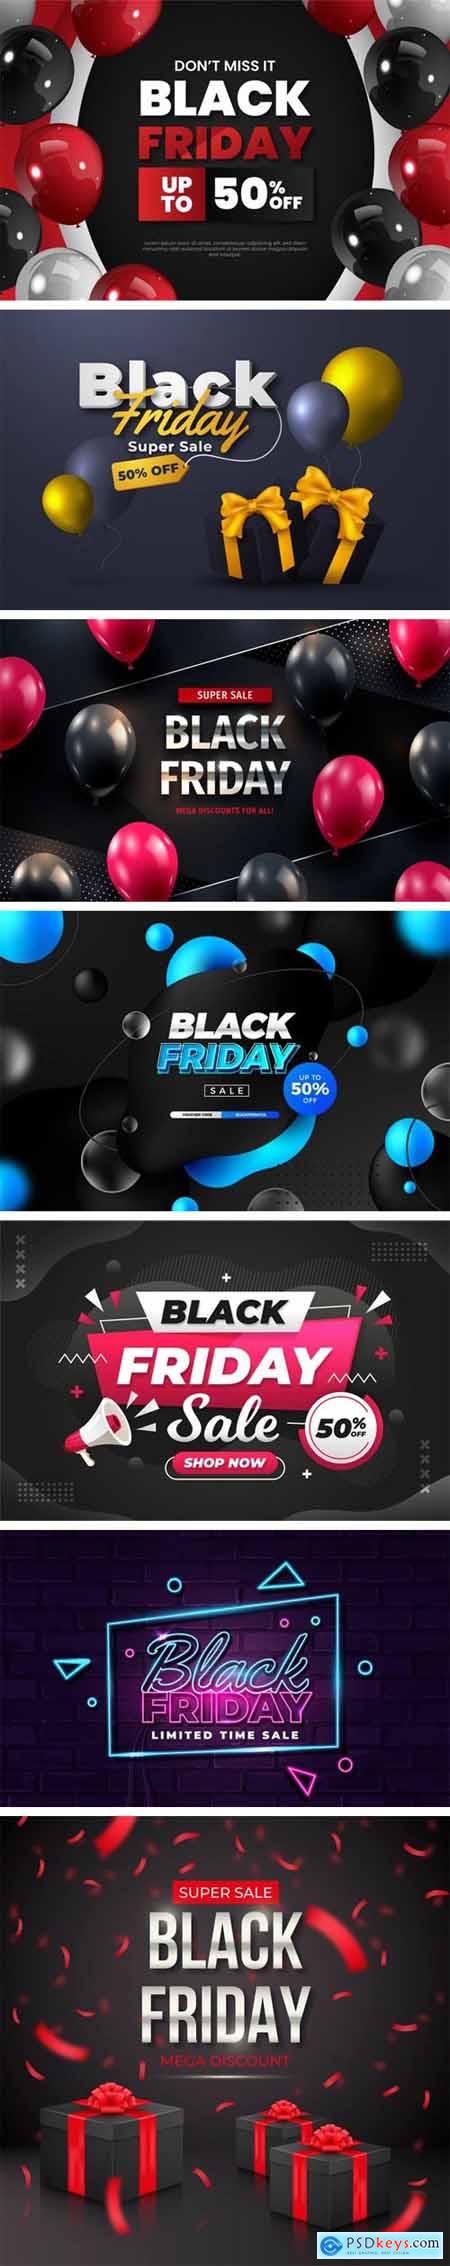 7 Black Friday Sales Backgrounds Vector Design Templates